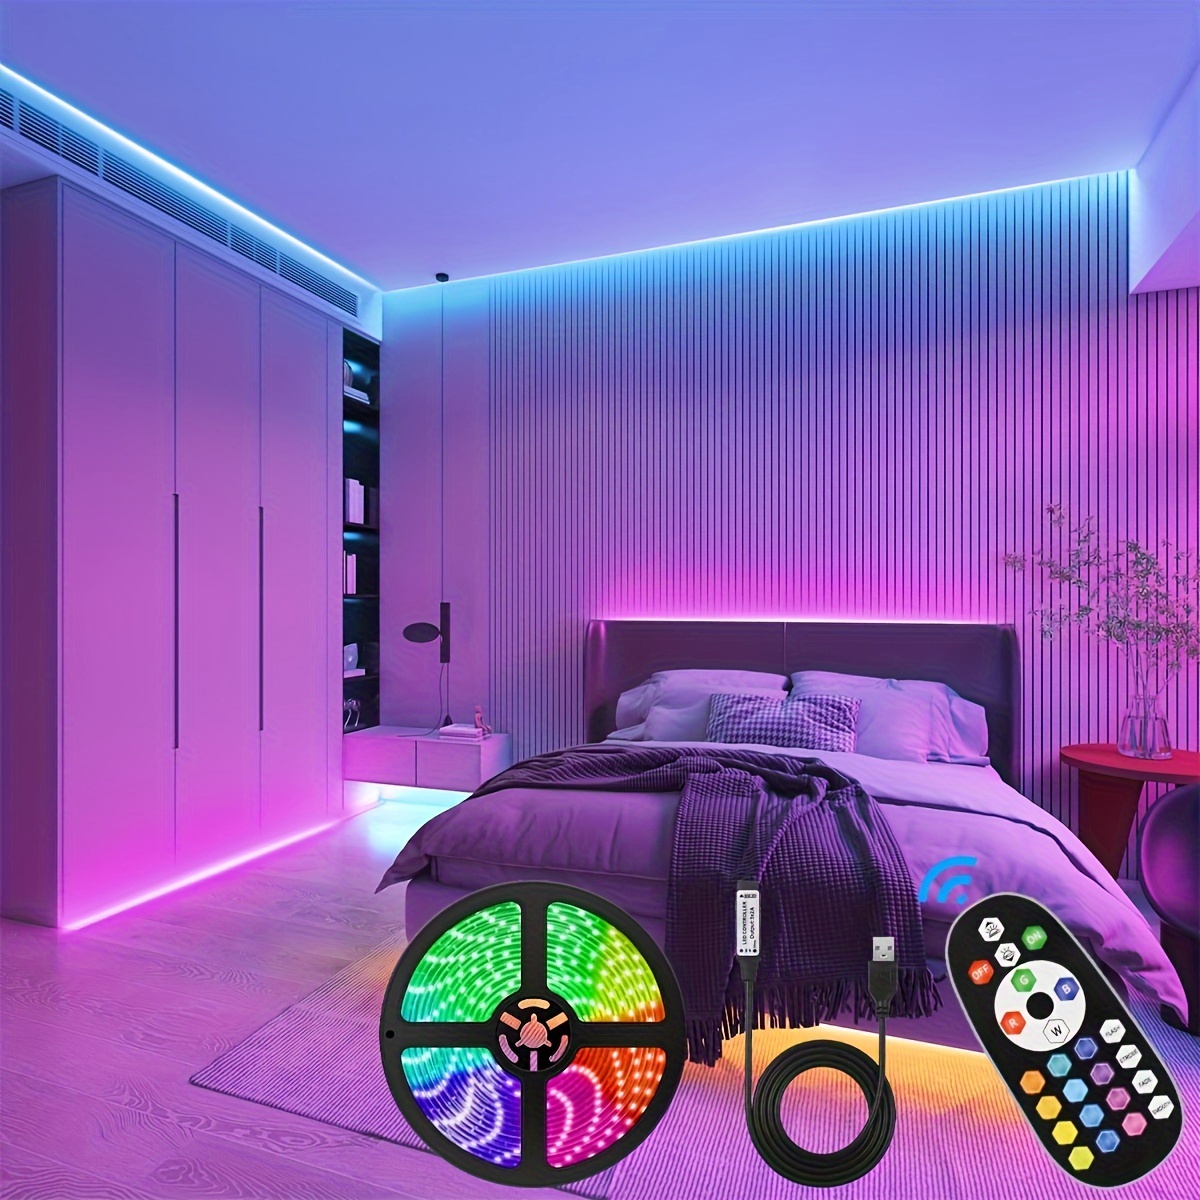 RGB led strip light - For Gaming Room - 15ft/5Meter RGB Lights For